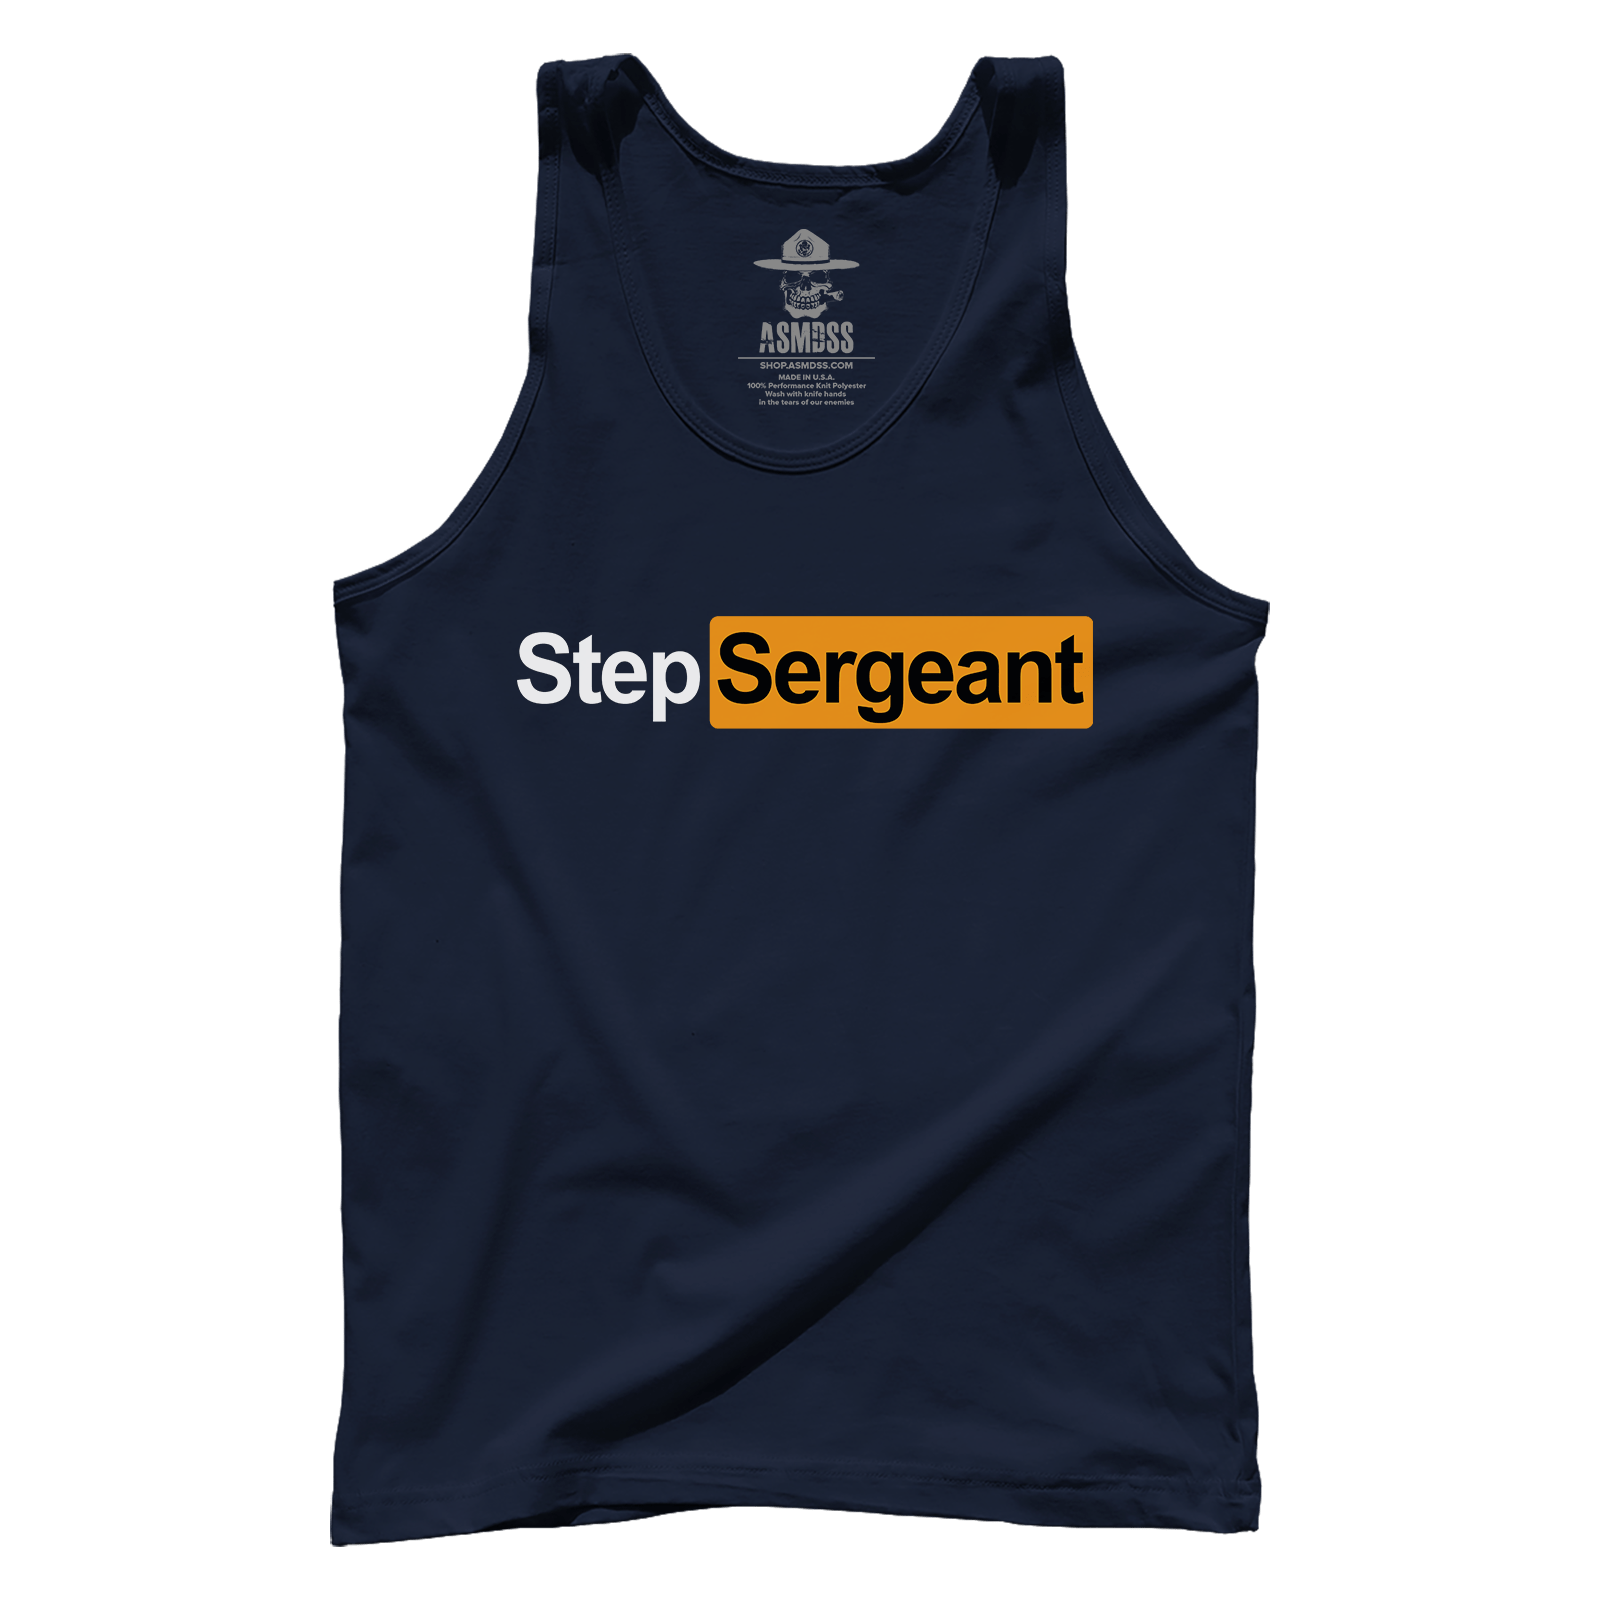 Step Sergeant